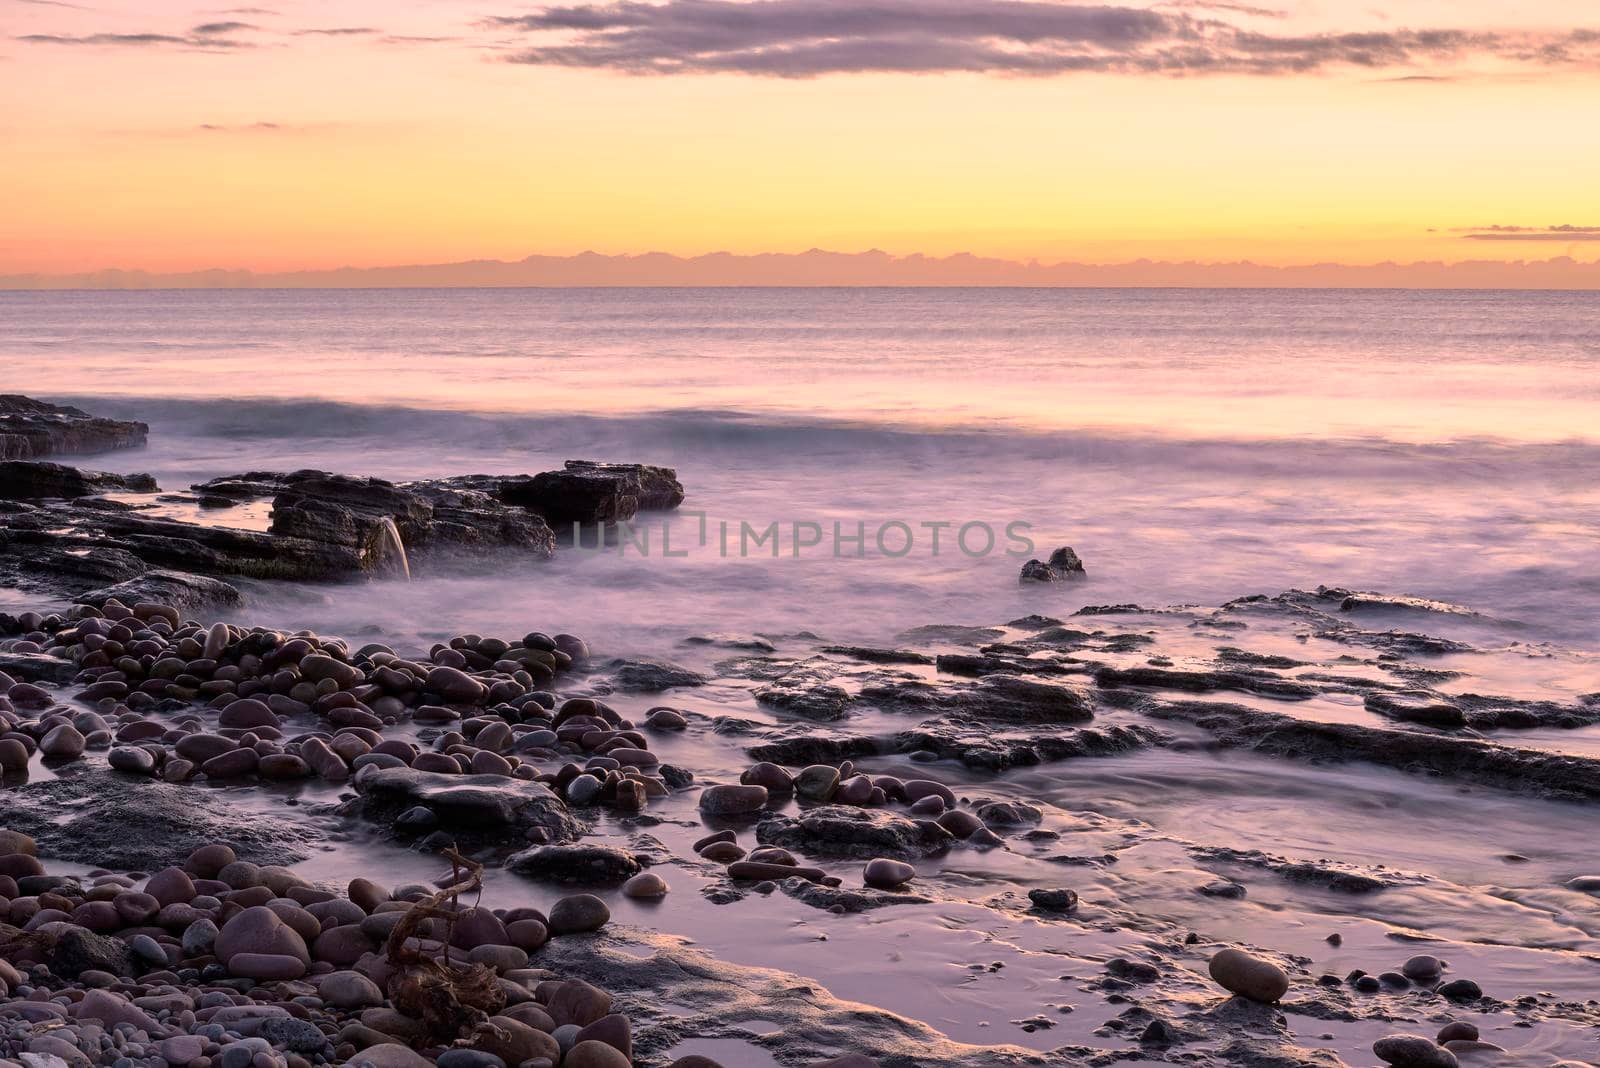 Sunrise on the rocky beach, long exposure, water silk effect